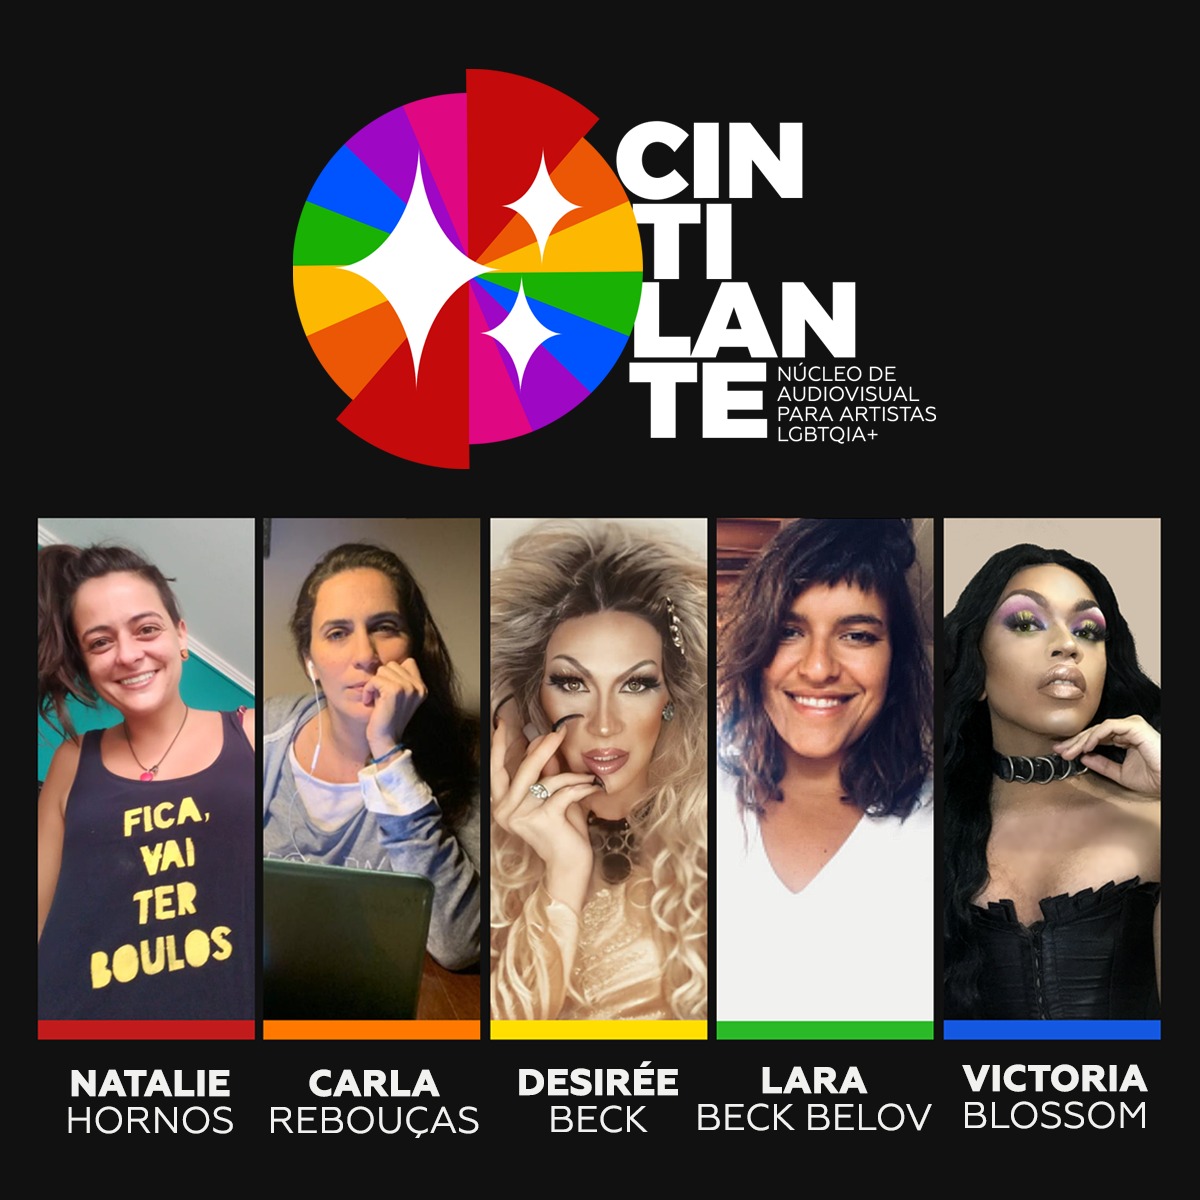 Cineasta baiana Carla Rebouças cria curso gratuito de audiovisual voltado para artistas LGBTQIA+